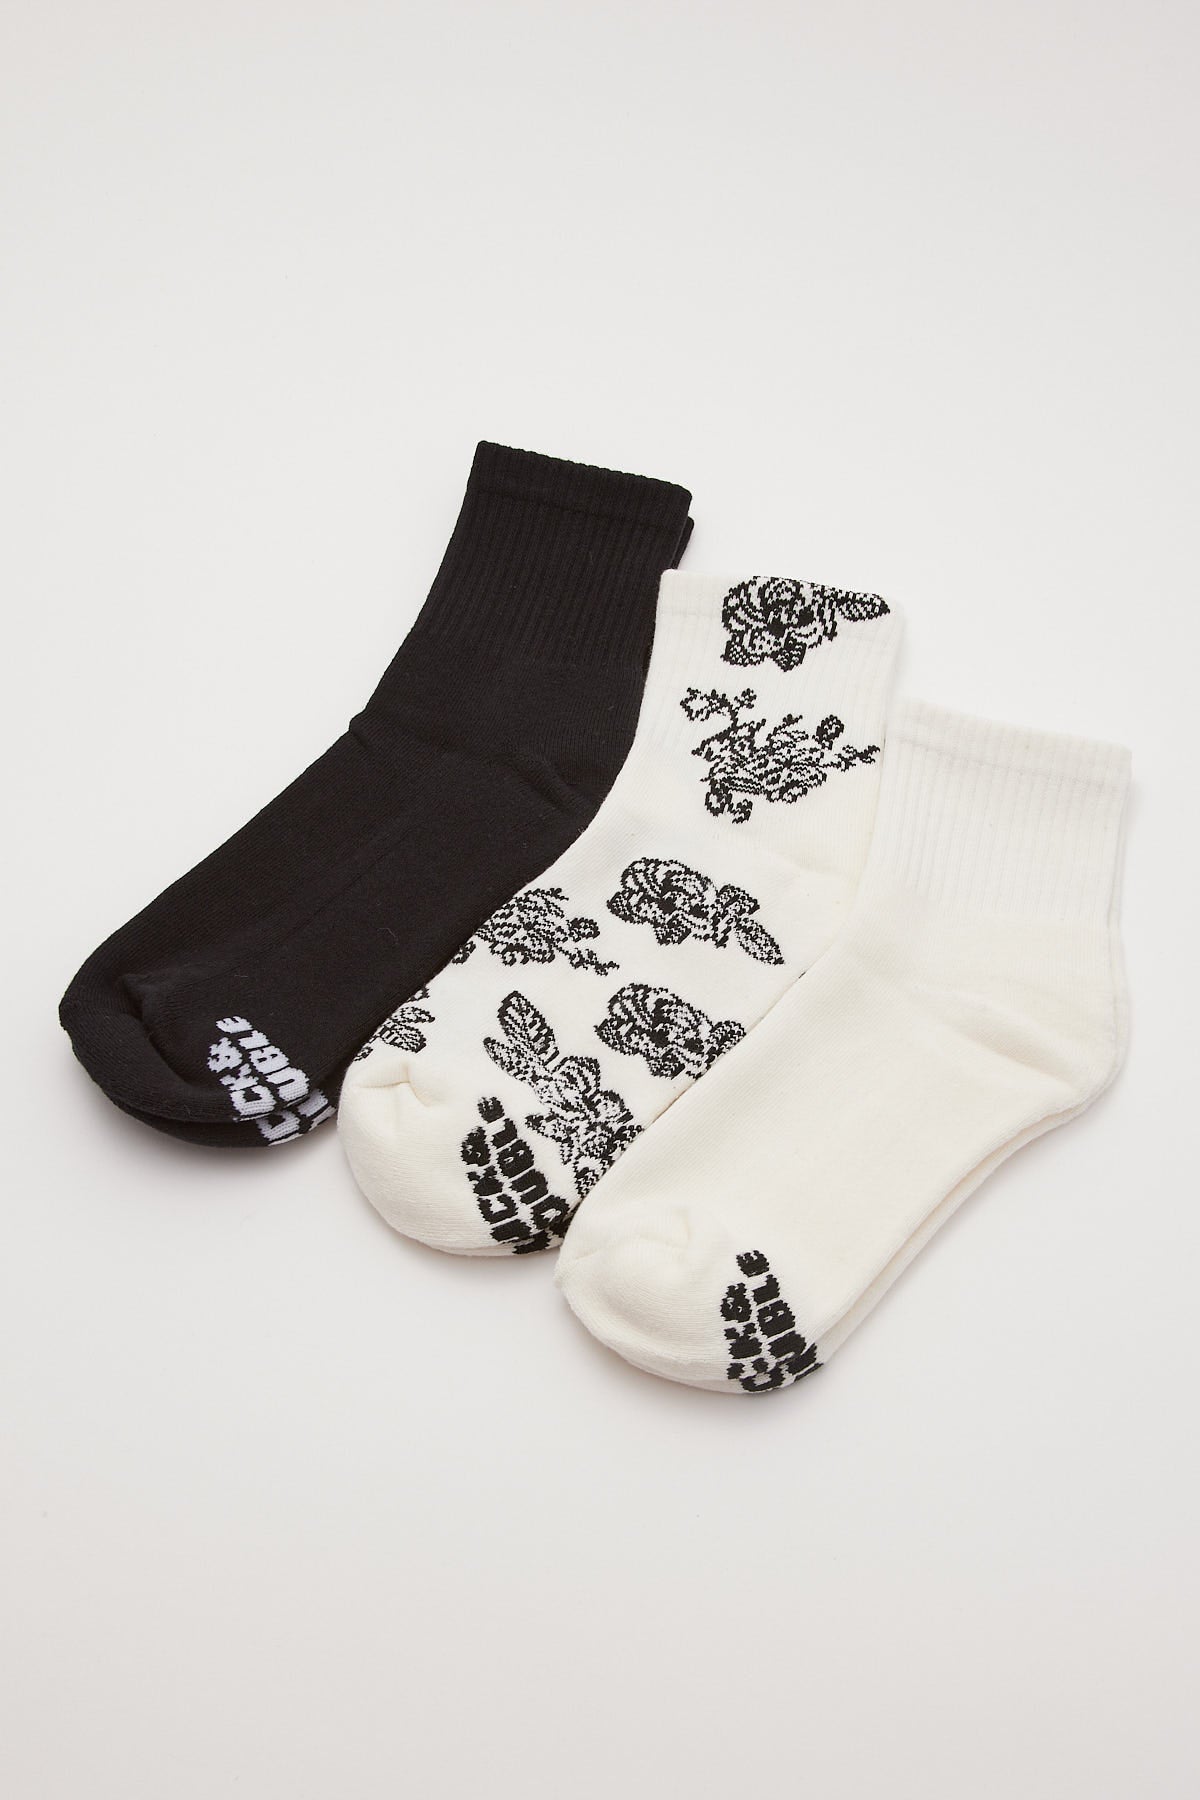 Luck & Trouble Botanics Quarter Crew Sock 3 Pack Black/White/Print